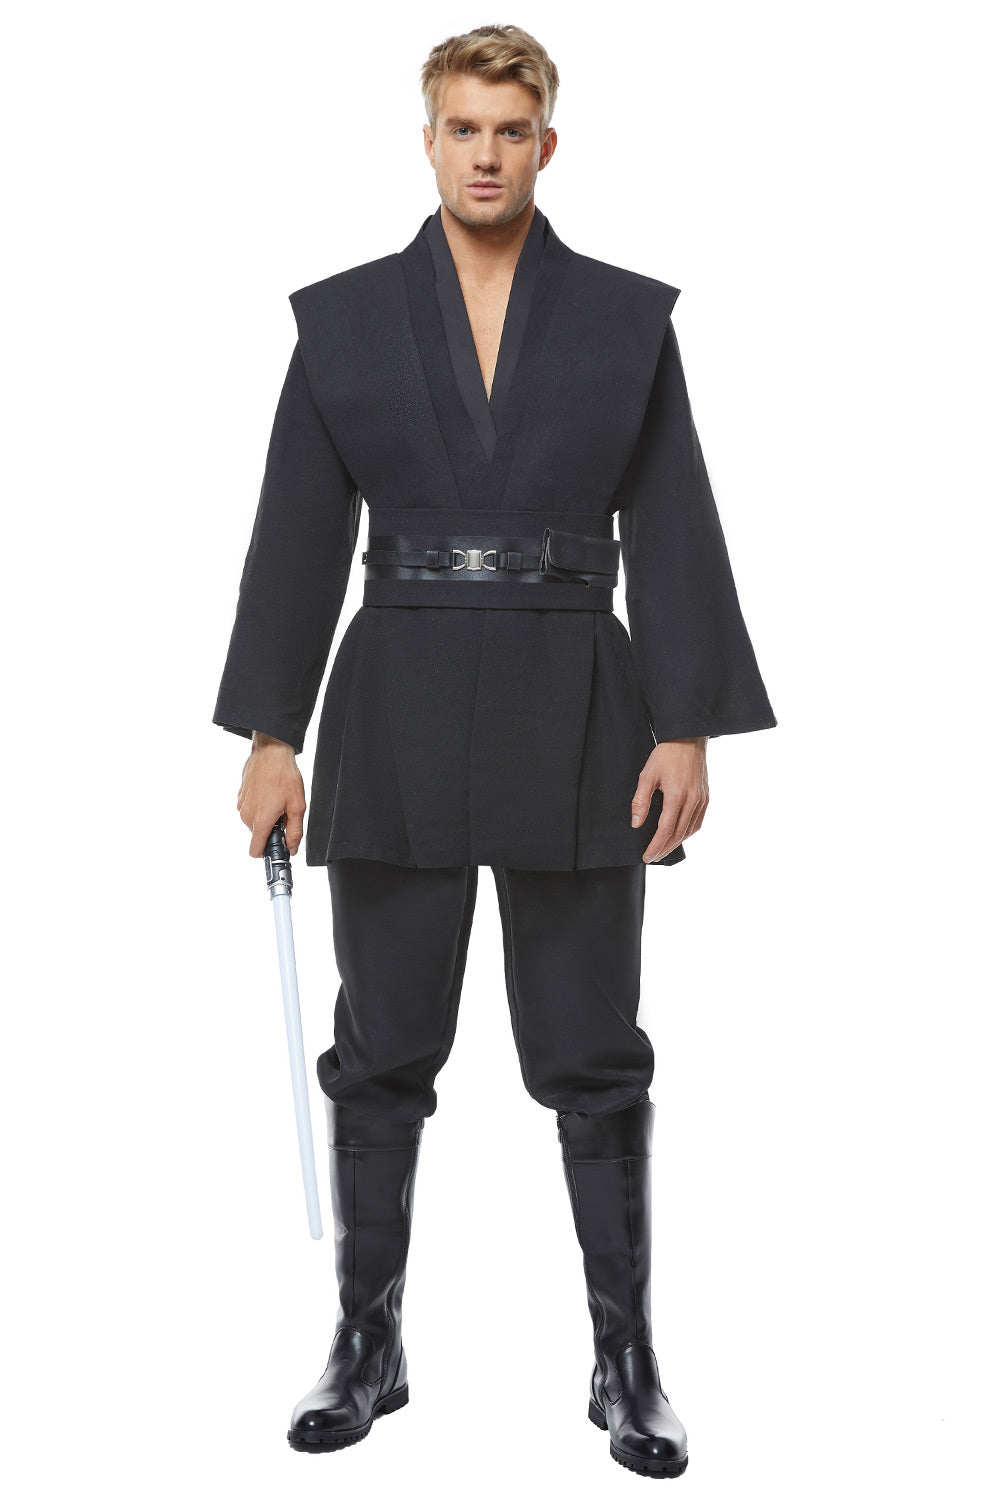 SeeCosplay Obi Wan Kenobi Jedi Black Version No Cloak Costume SWCostume